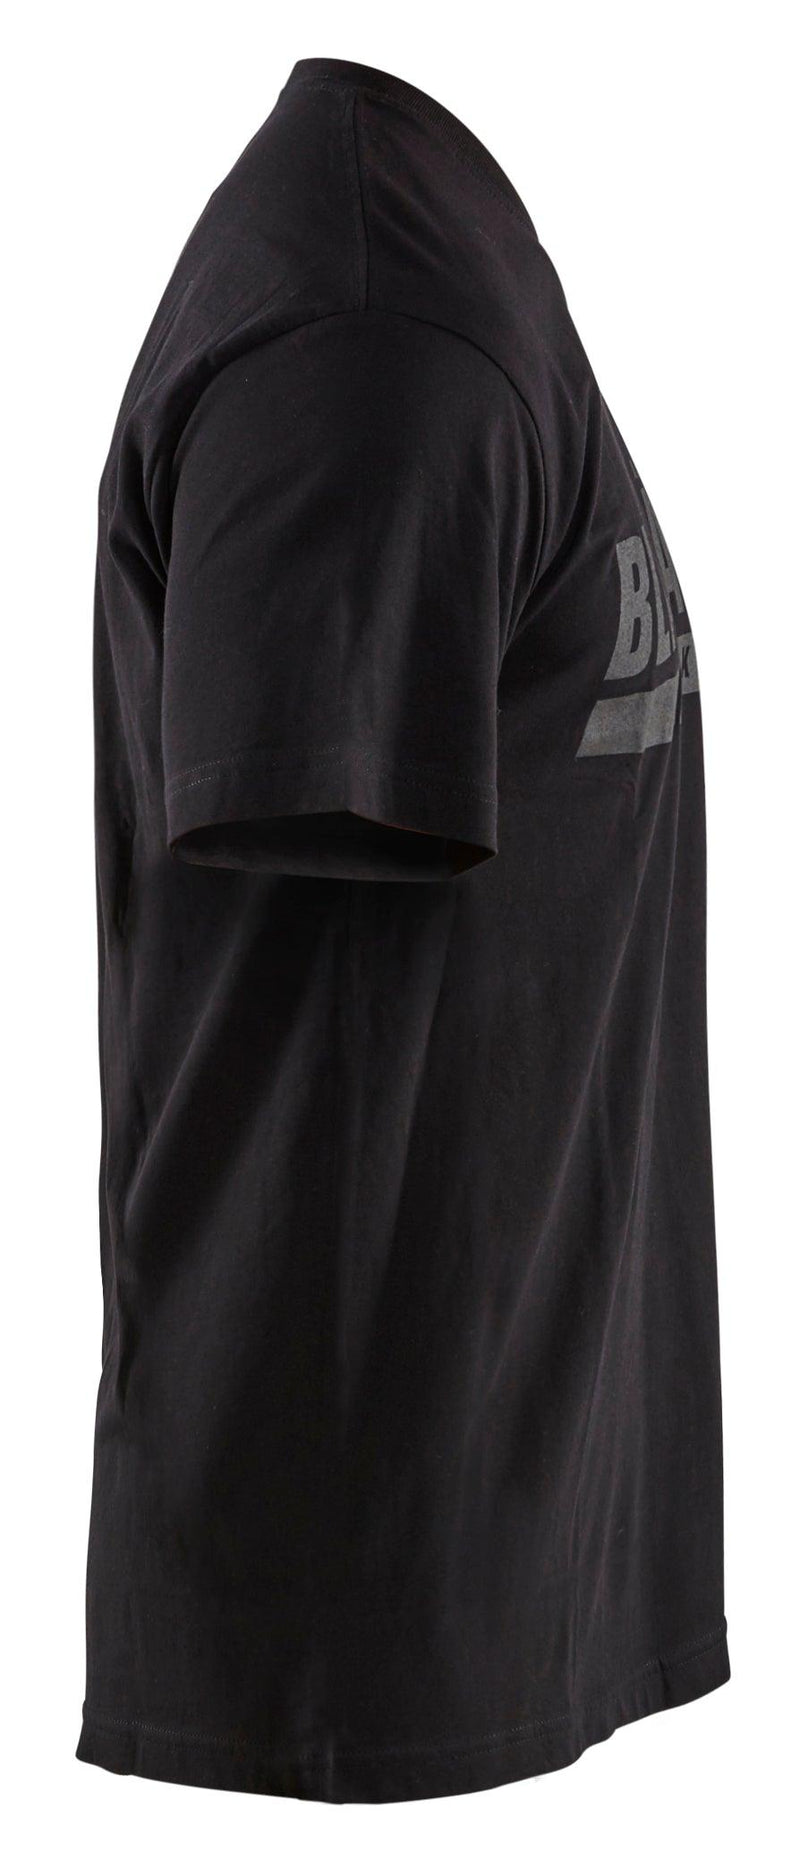 Blaklader 3555 Short Sleeve T-Shirt with Blaklader Logo - Black - Trusted Gear Company LLC